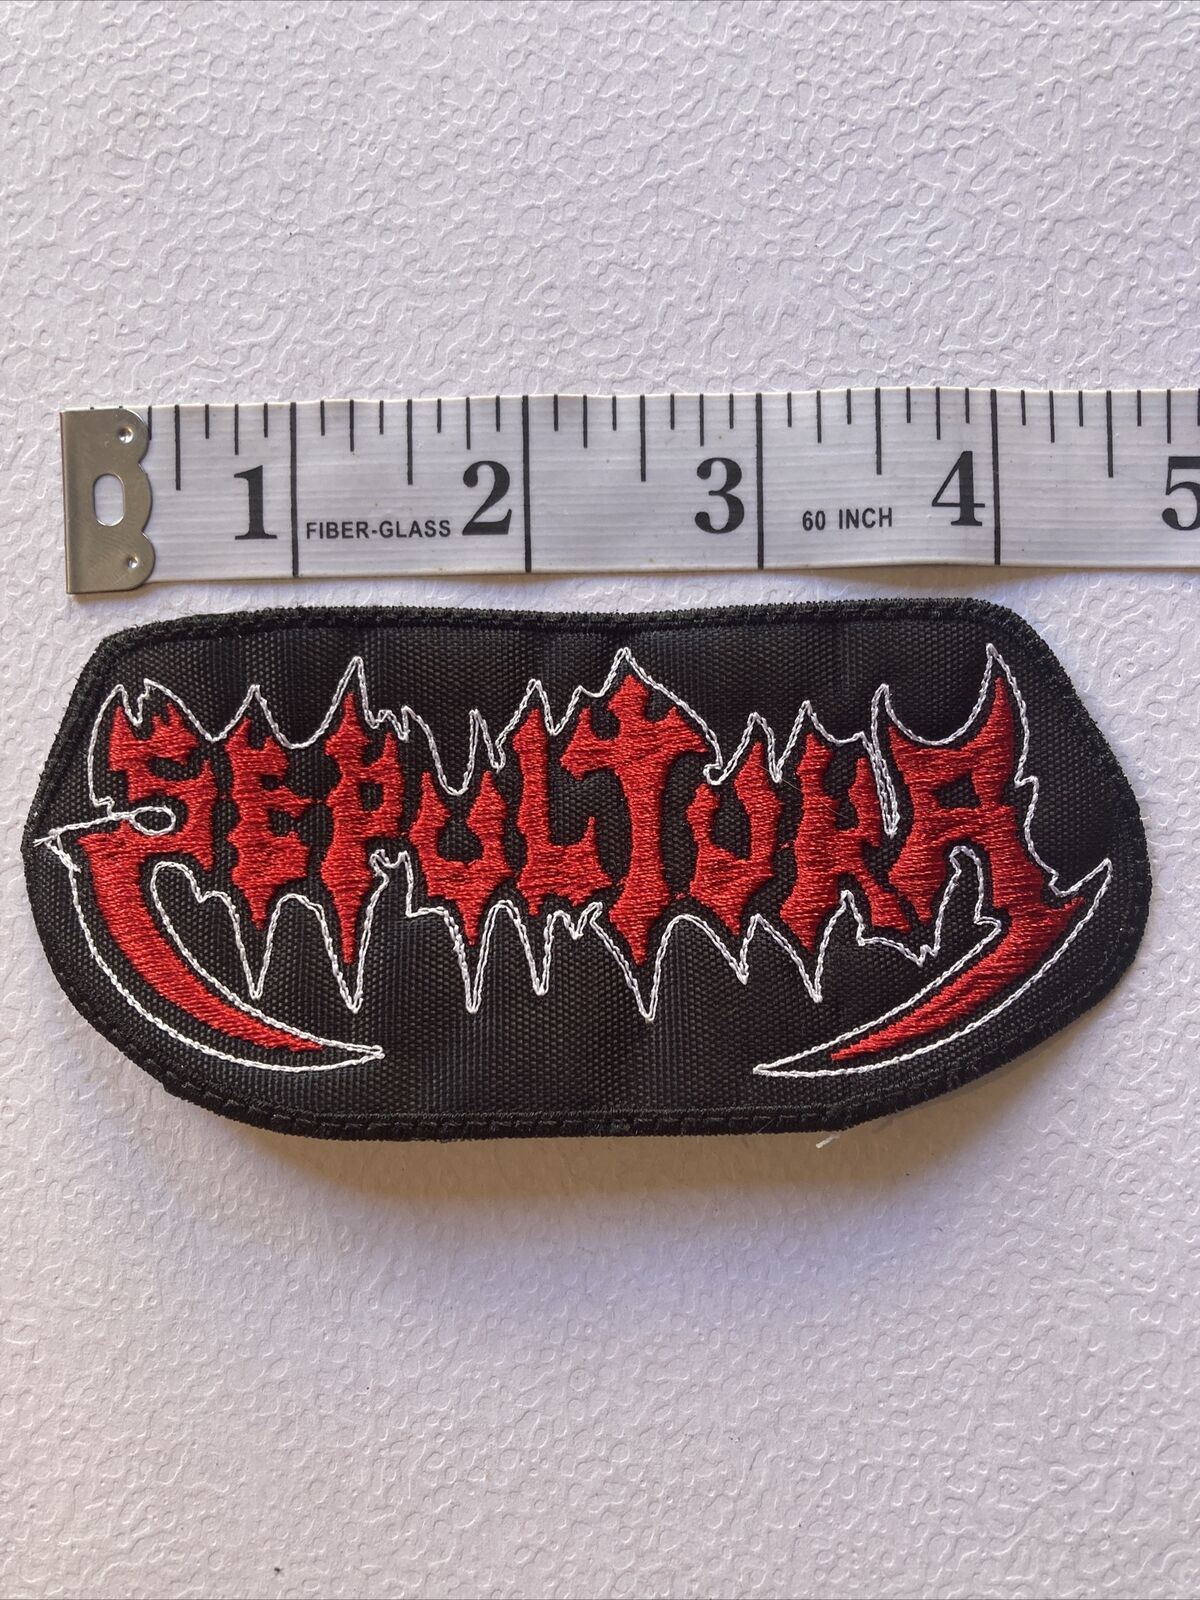 Sepultura Woven Patch Nailbomb Pantera Venom Metallica Megadeth Slipknot Slayer